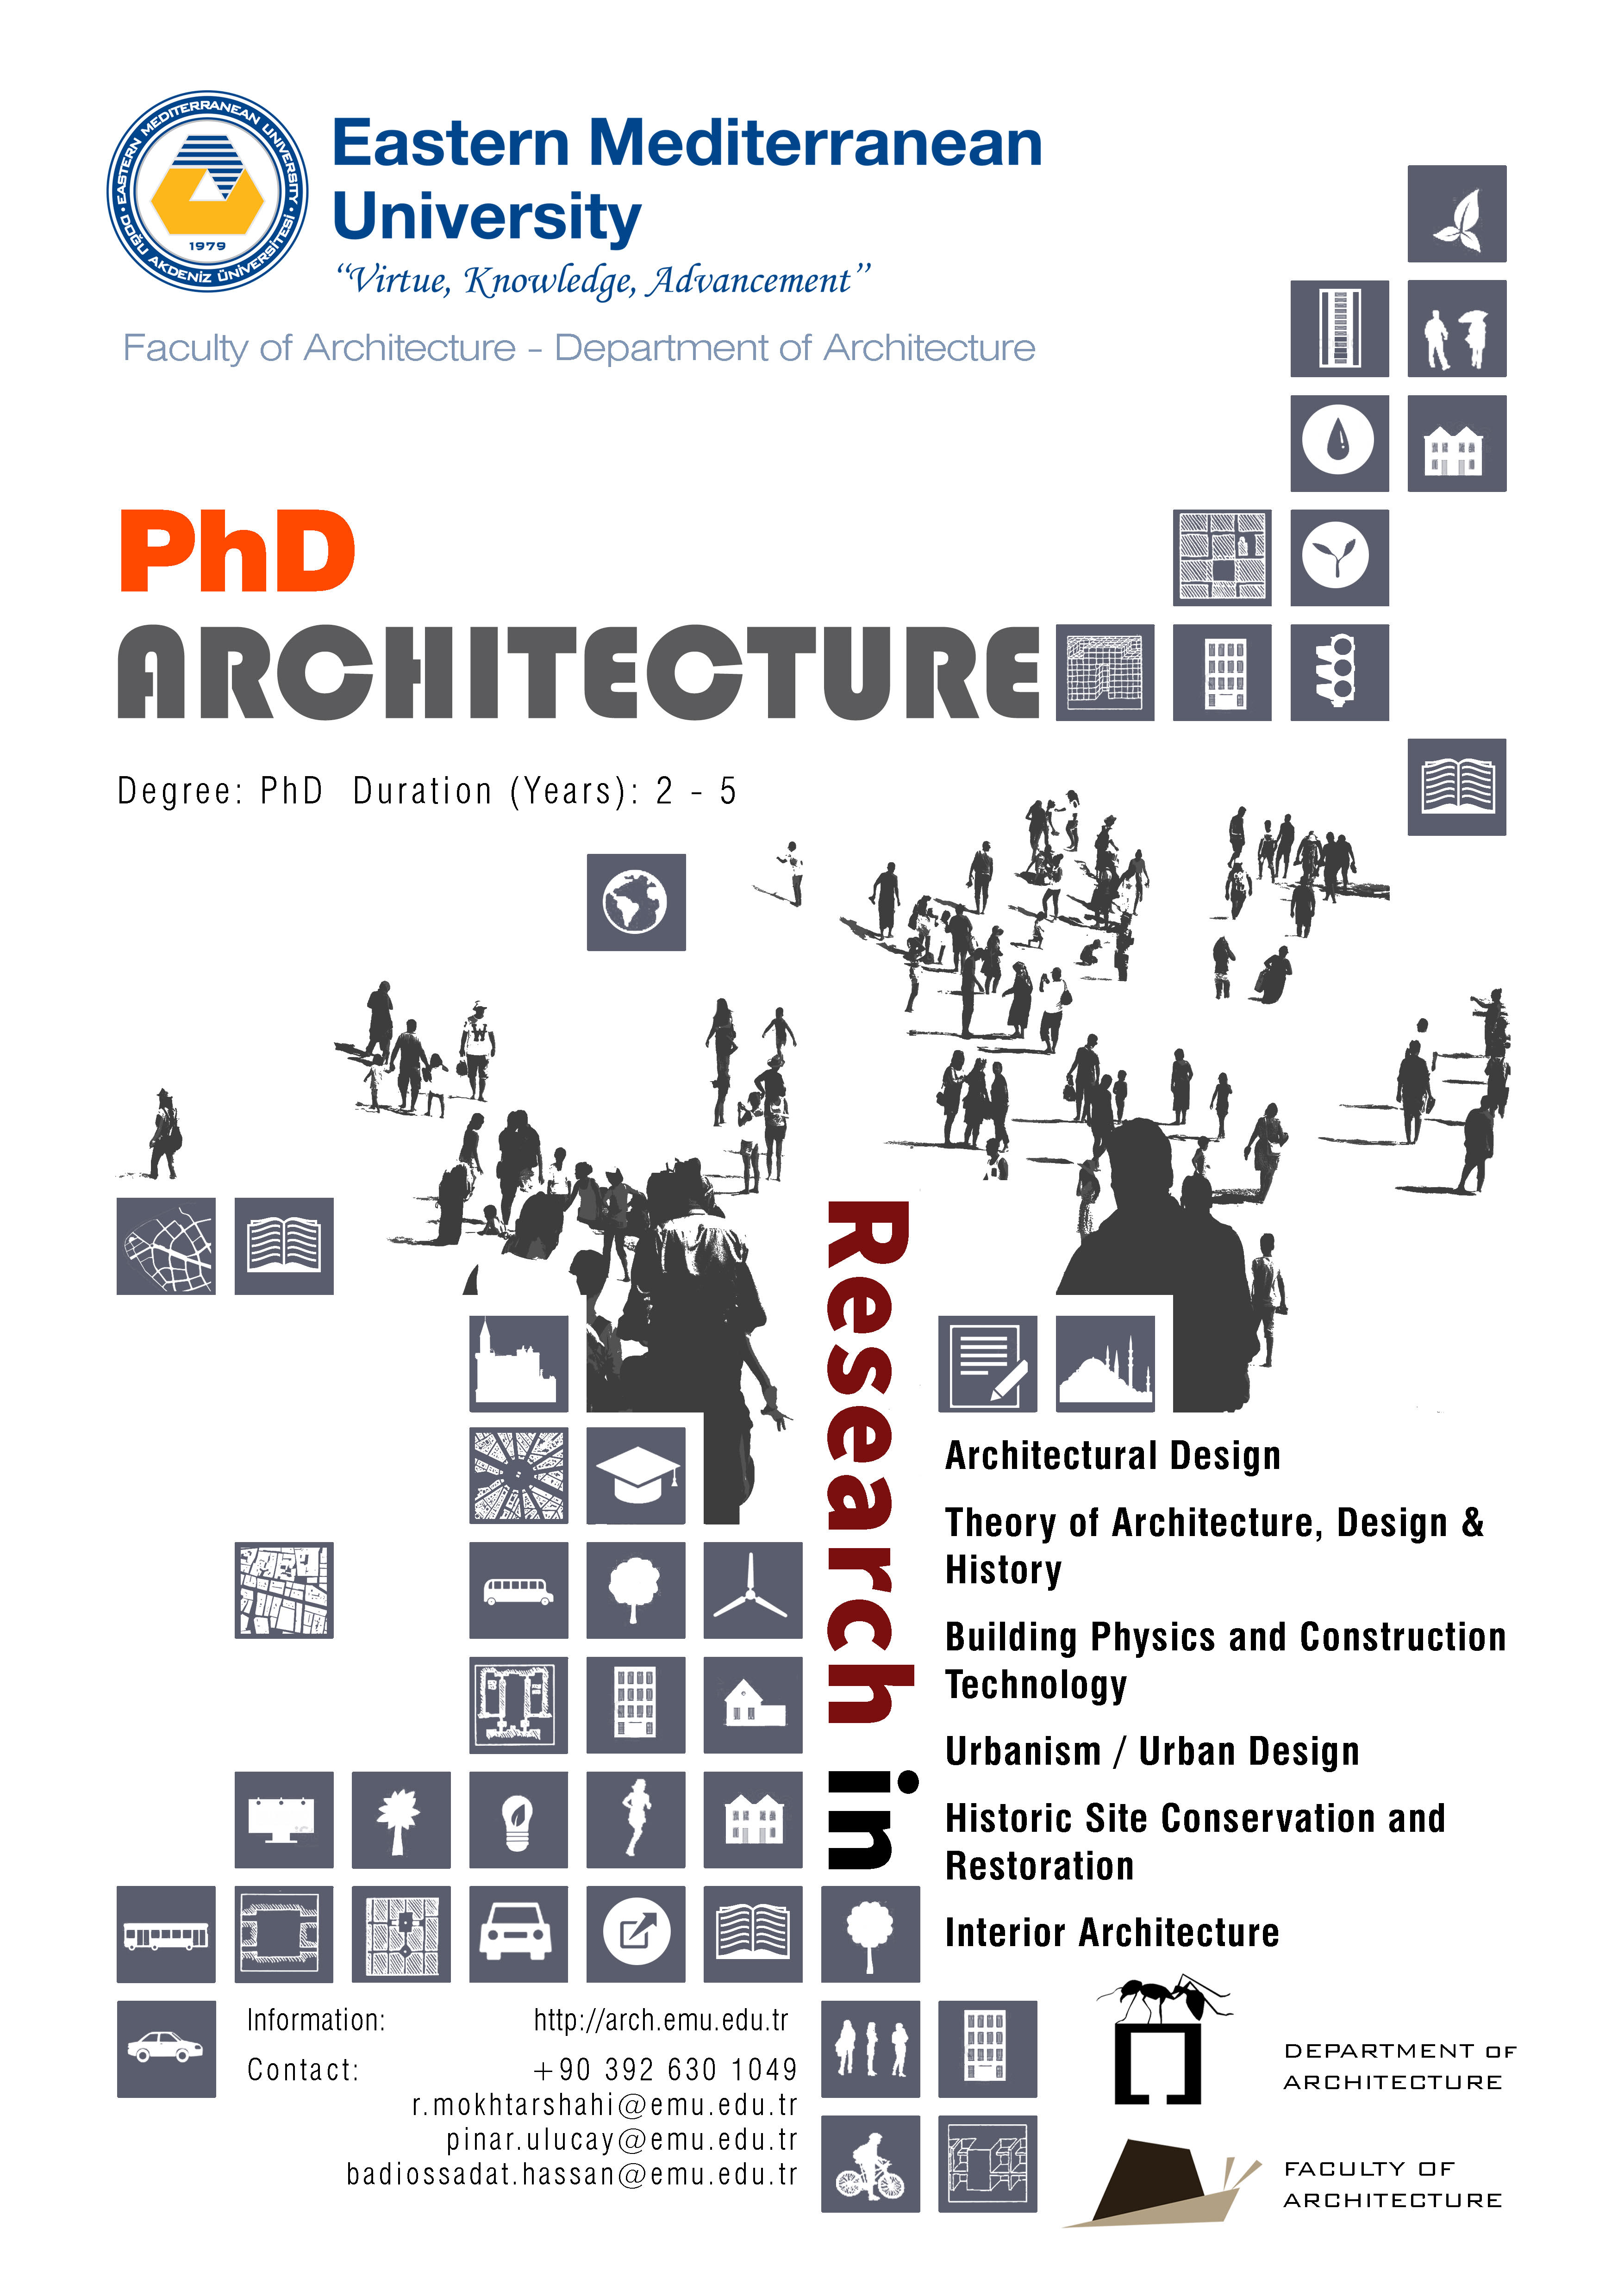 phd architecture jobs